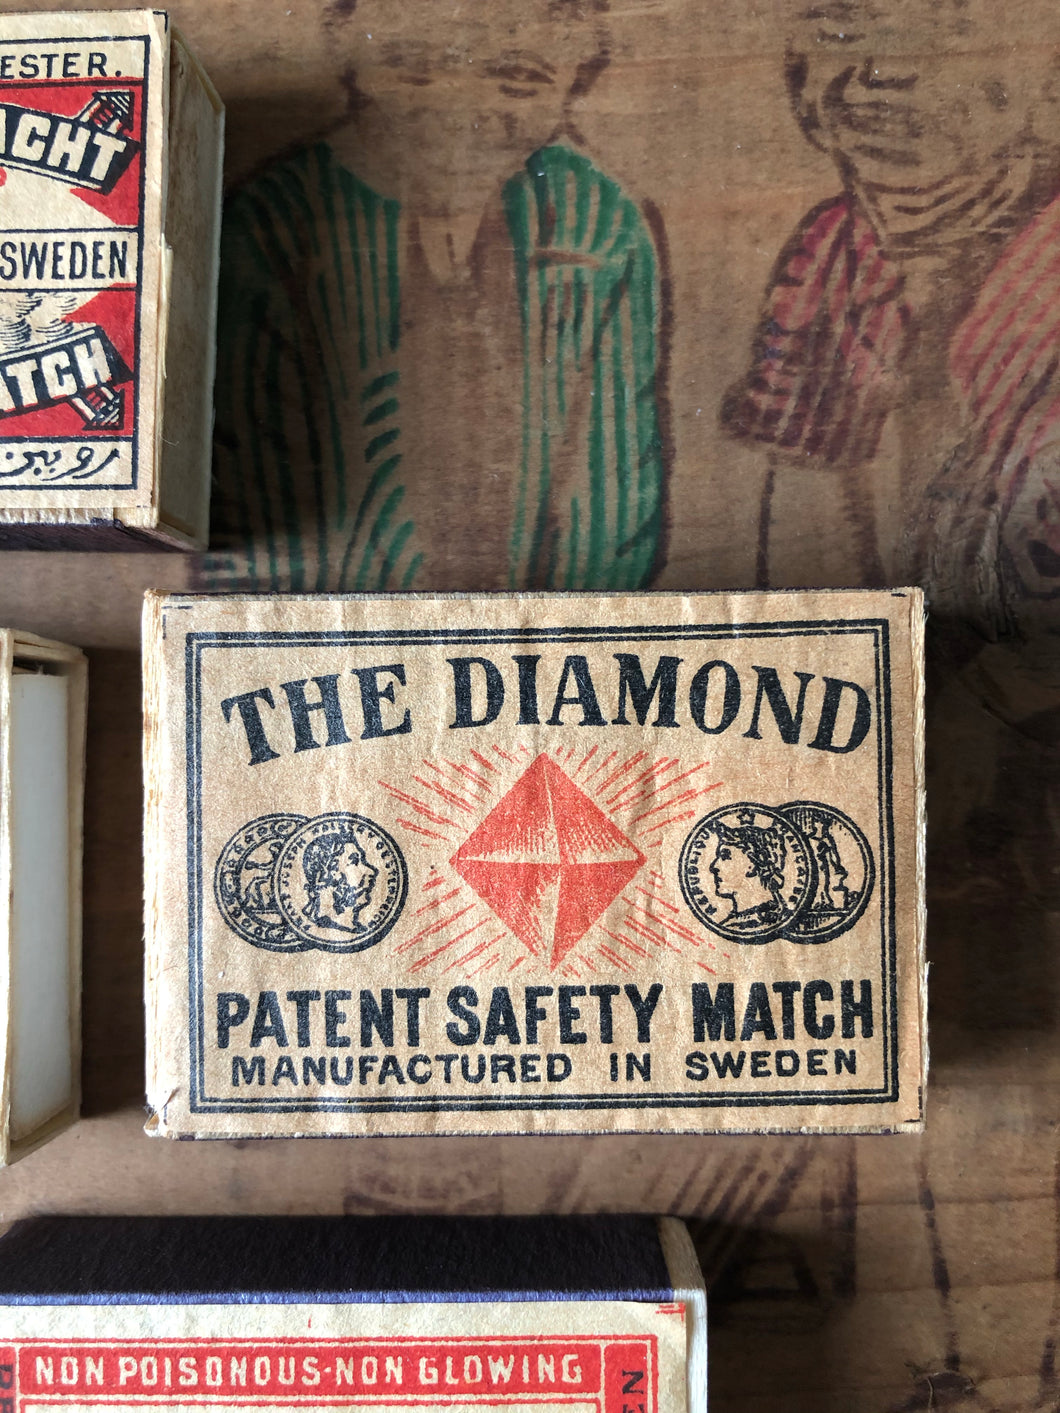 Box of matches, The Diamond